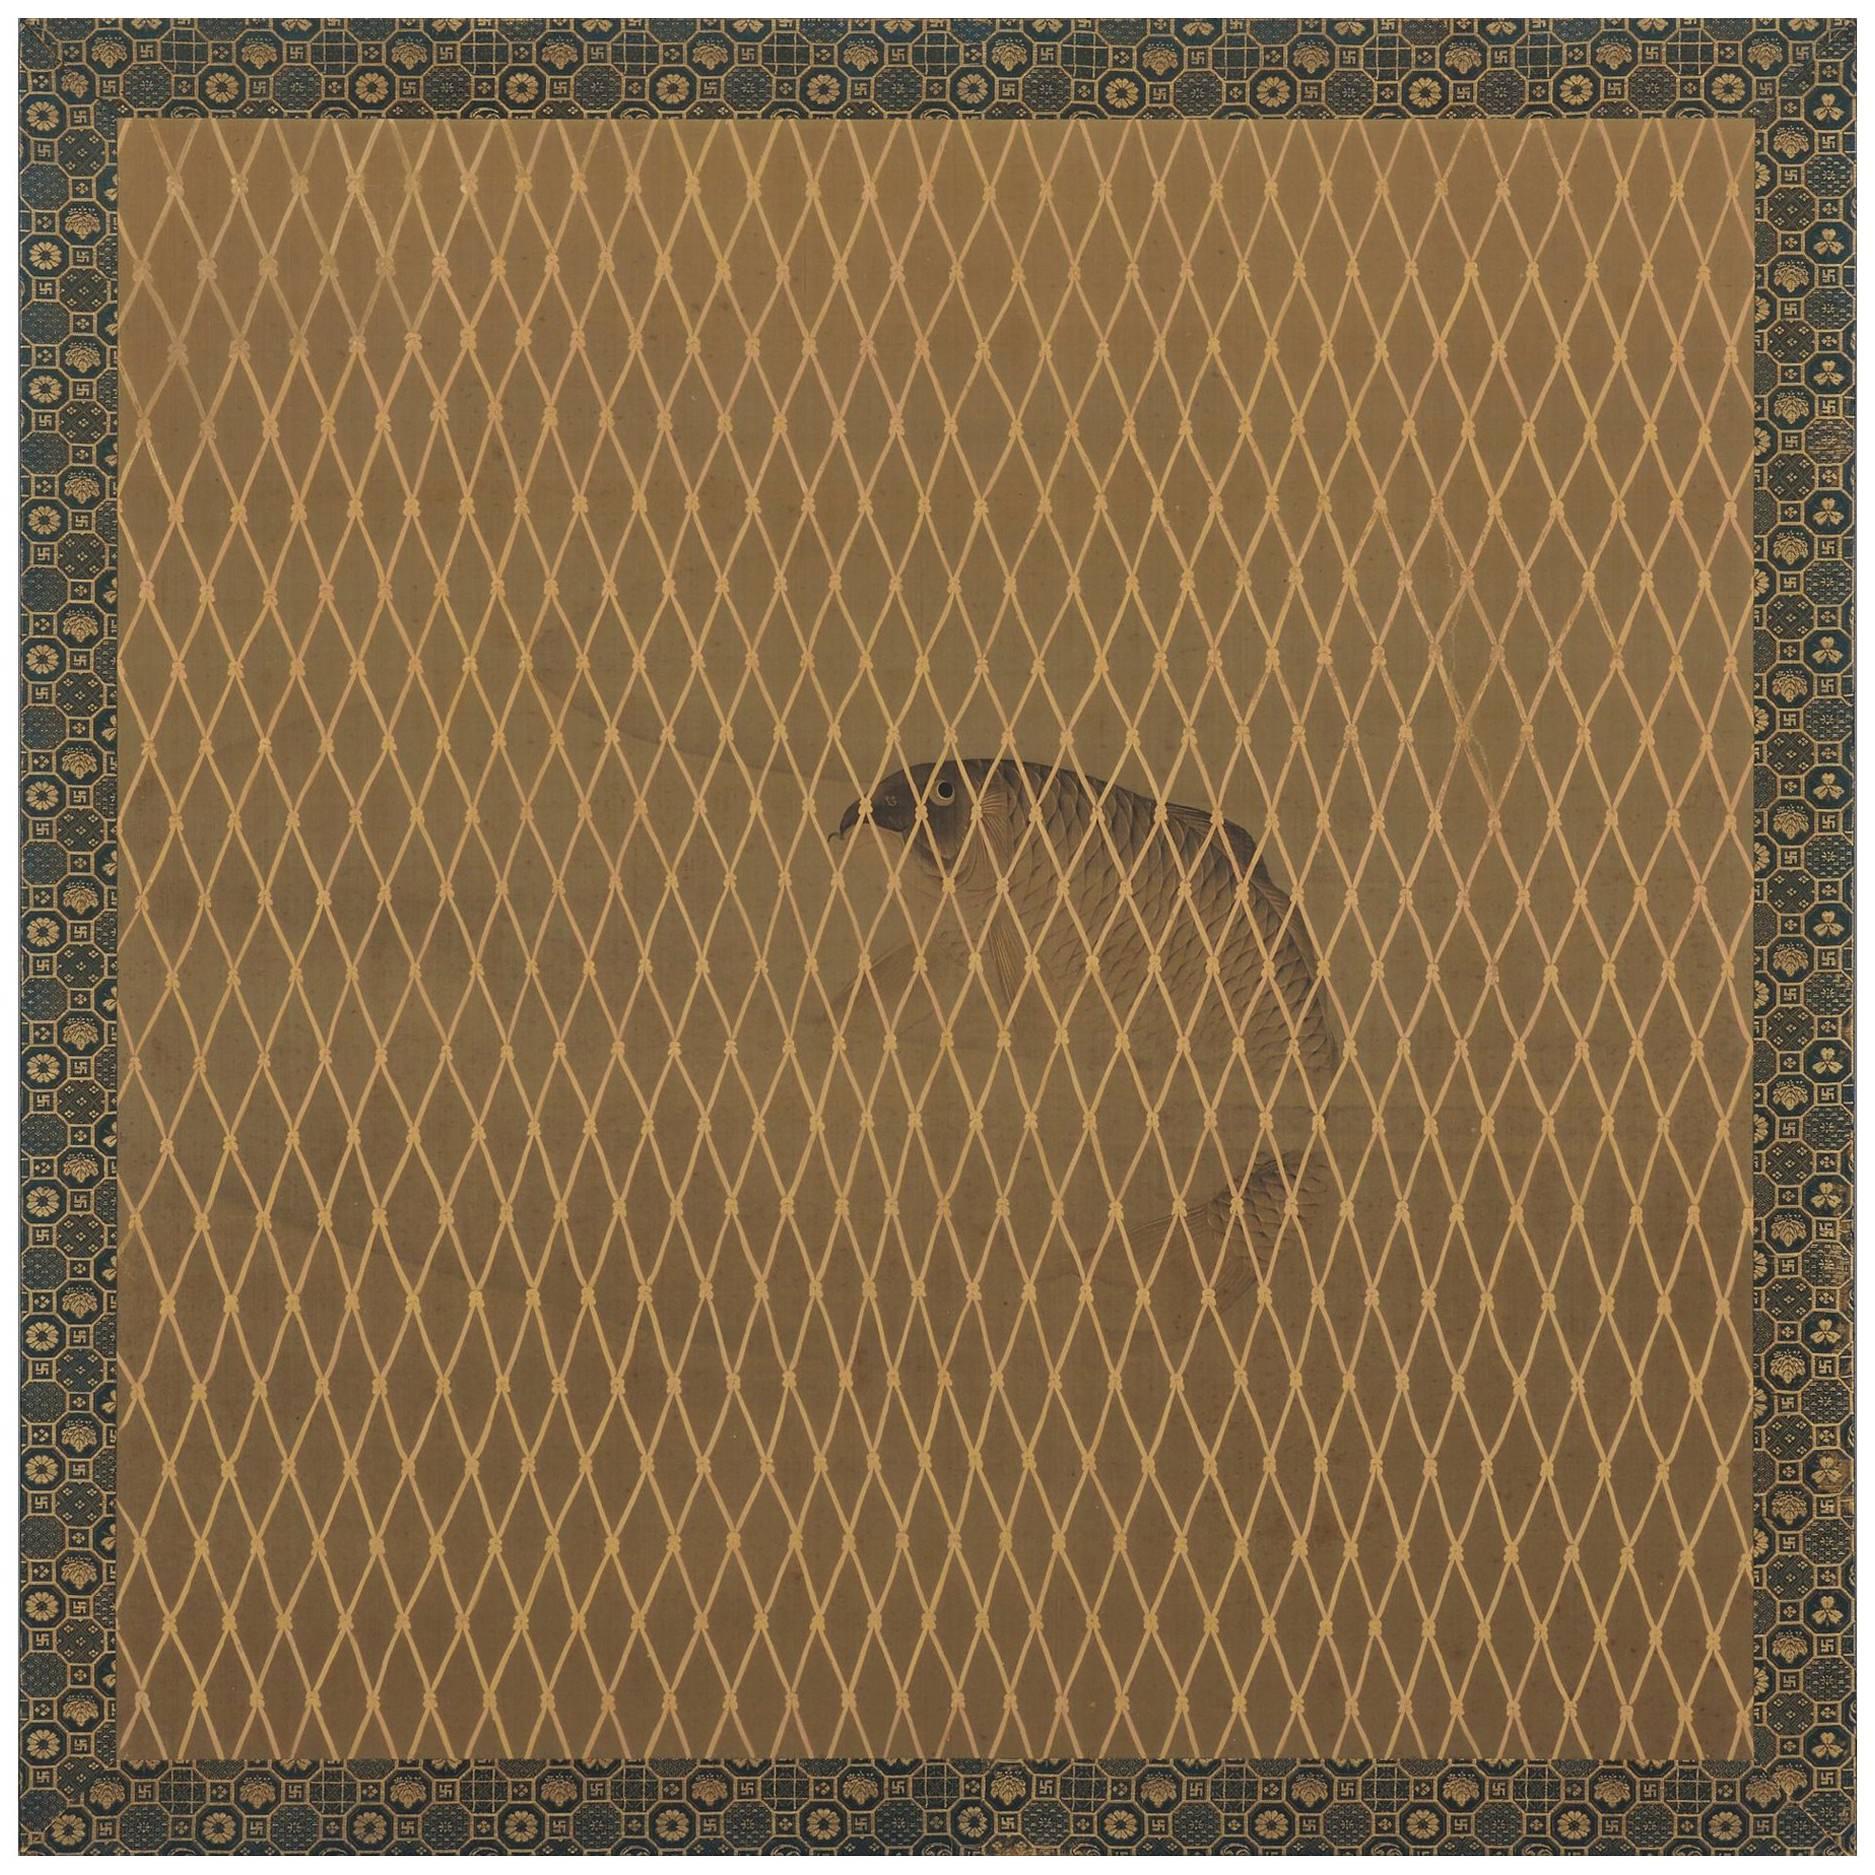 Kunii Oyo ‘Carp under Netting’ 1894, Framed Japanese Panel